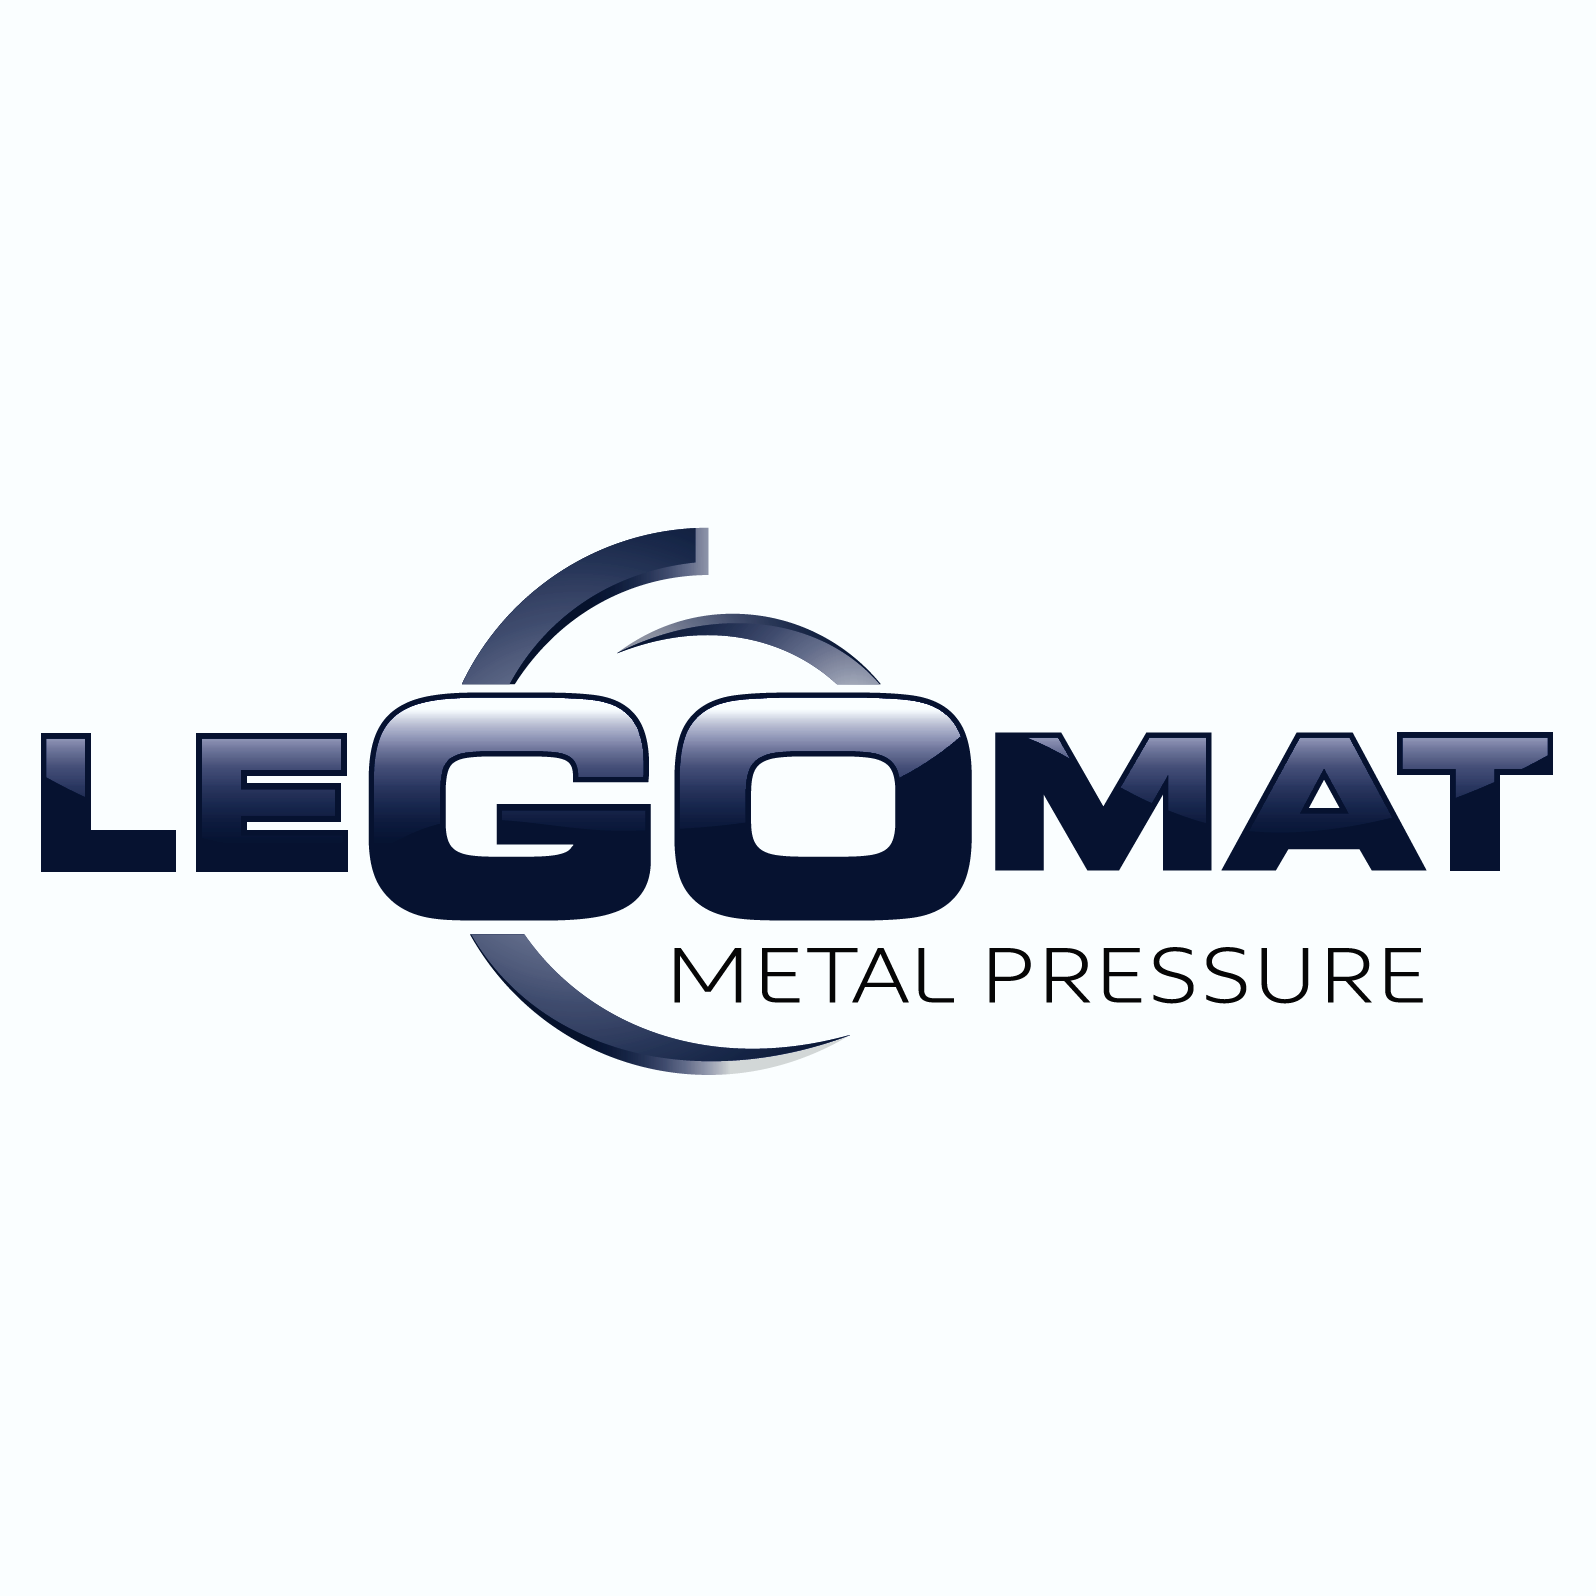 Legomat Metal Pressure